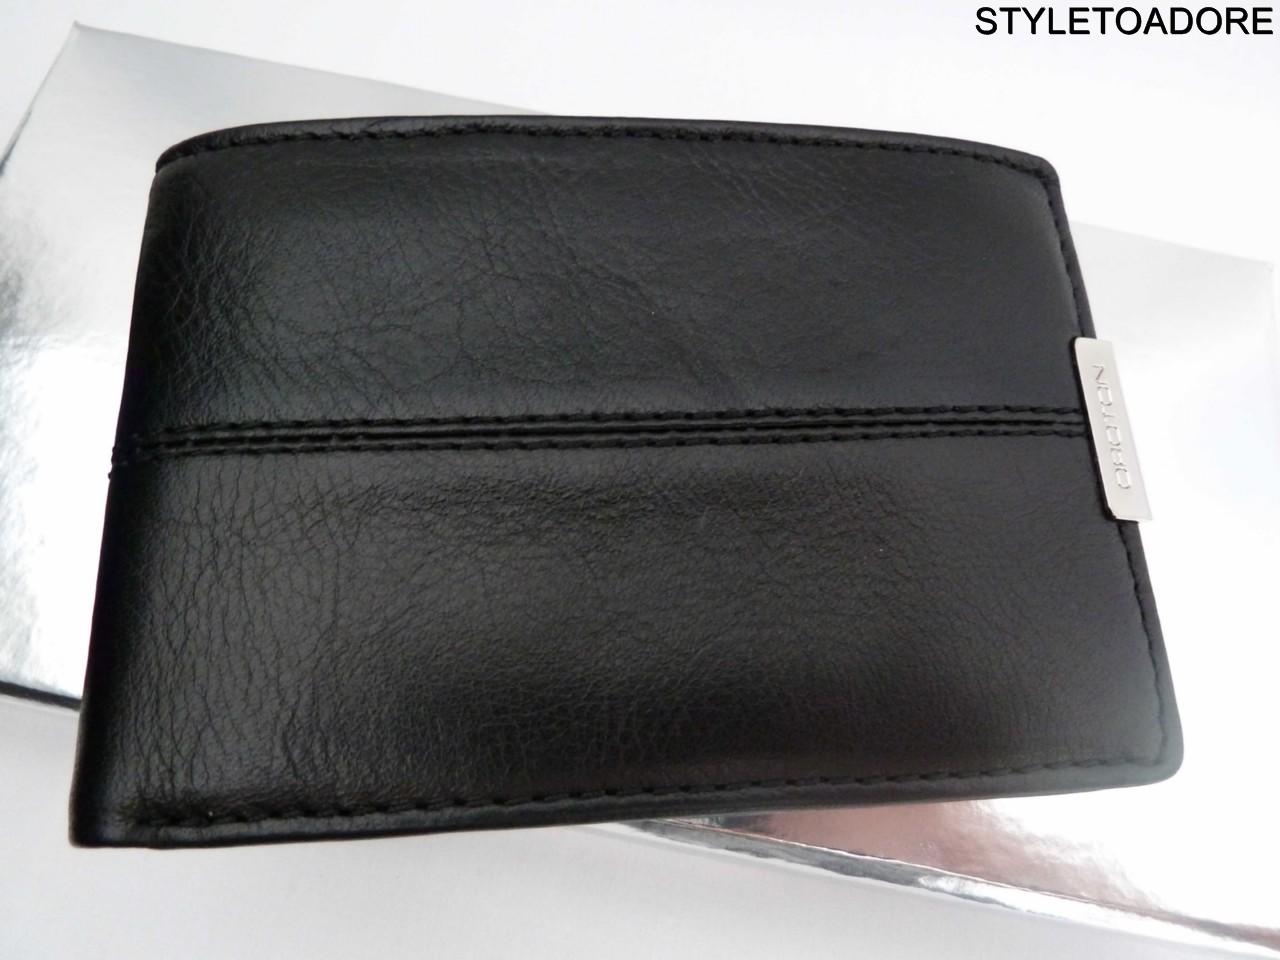 Oroton Austere Mens Mini Black Leather Wallet BNWT RRP $125 00 | eBay